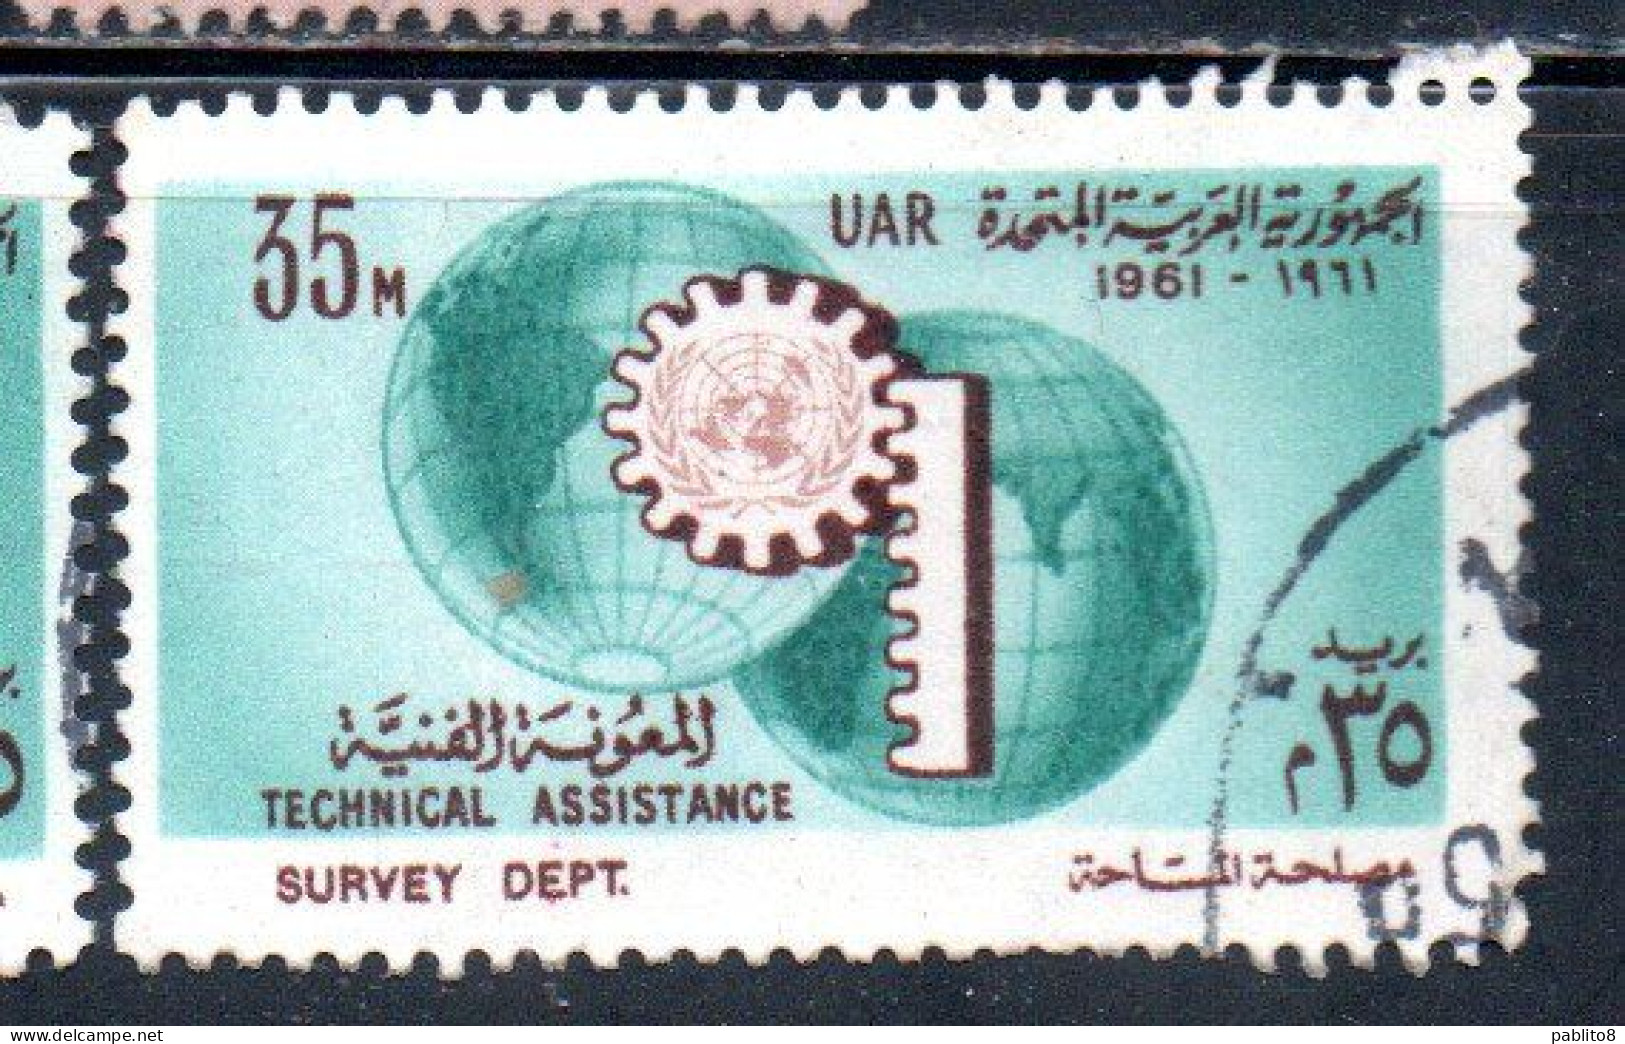 UAR EGYPT EGITTO 1961 UN ONU TECHNICAL ASSISTENCE PROGRAM AND 16th ANNIVERSARY 35m USED USATO OBLITERE' - Used Stamps